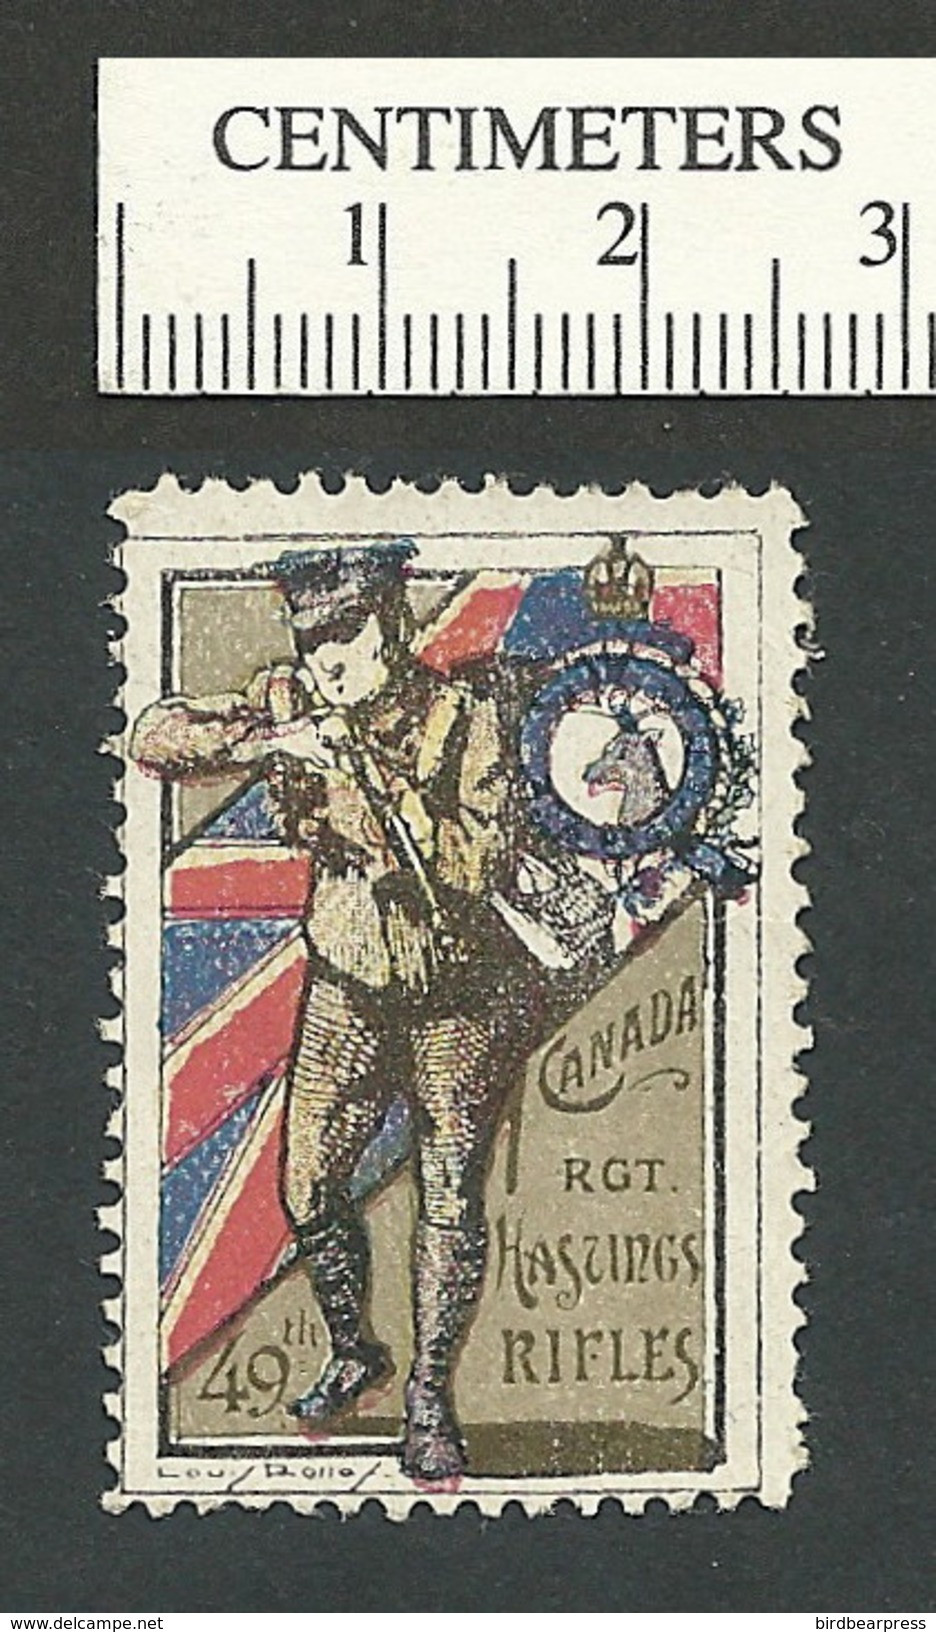 B46-45 CANADA WWI Delandre Hastings Rifles Stamp MNH Crease - Vignettes Locales Et Privées